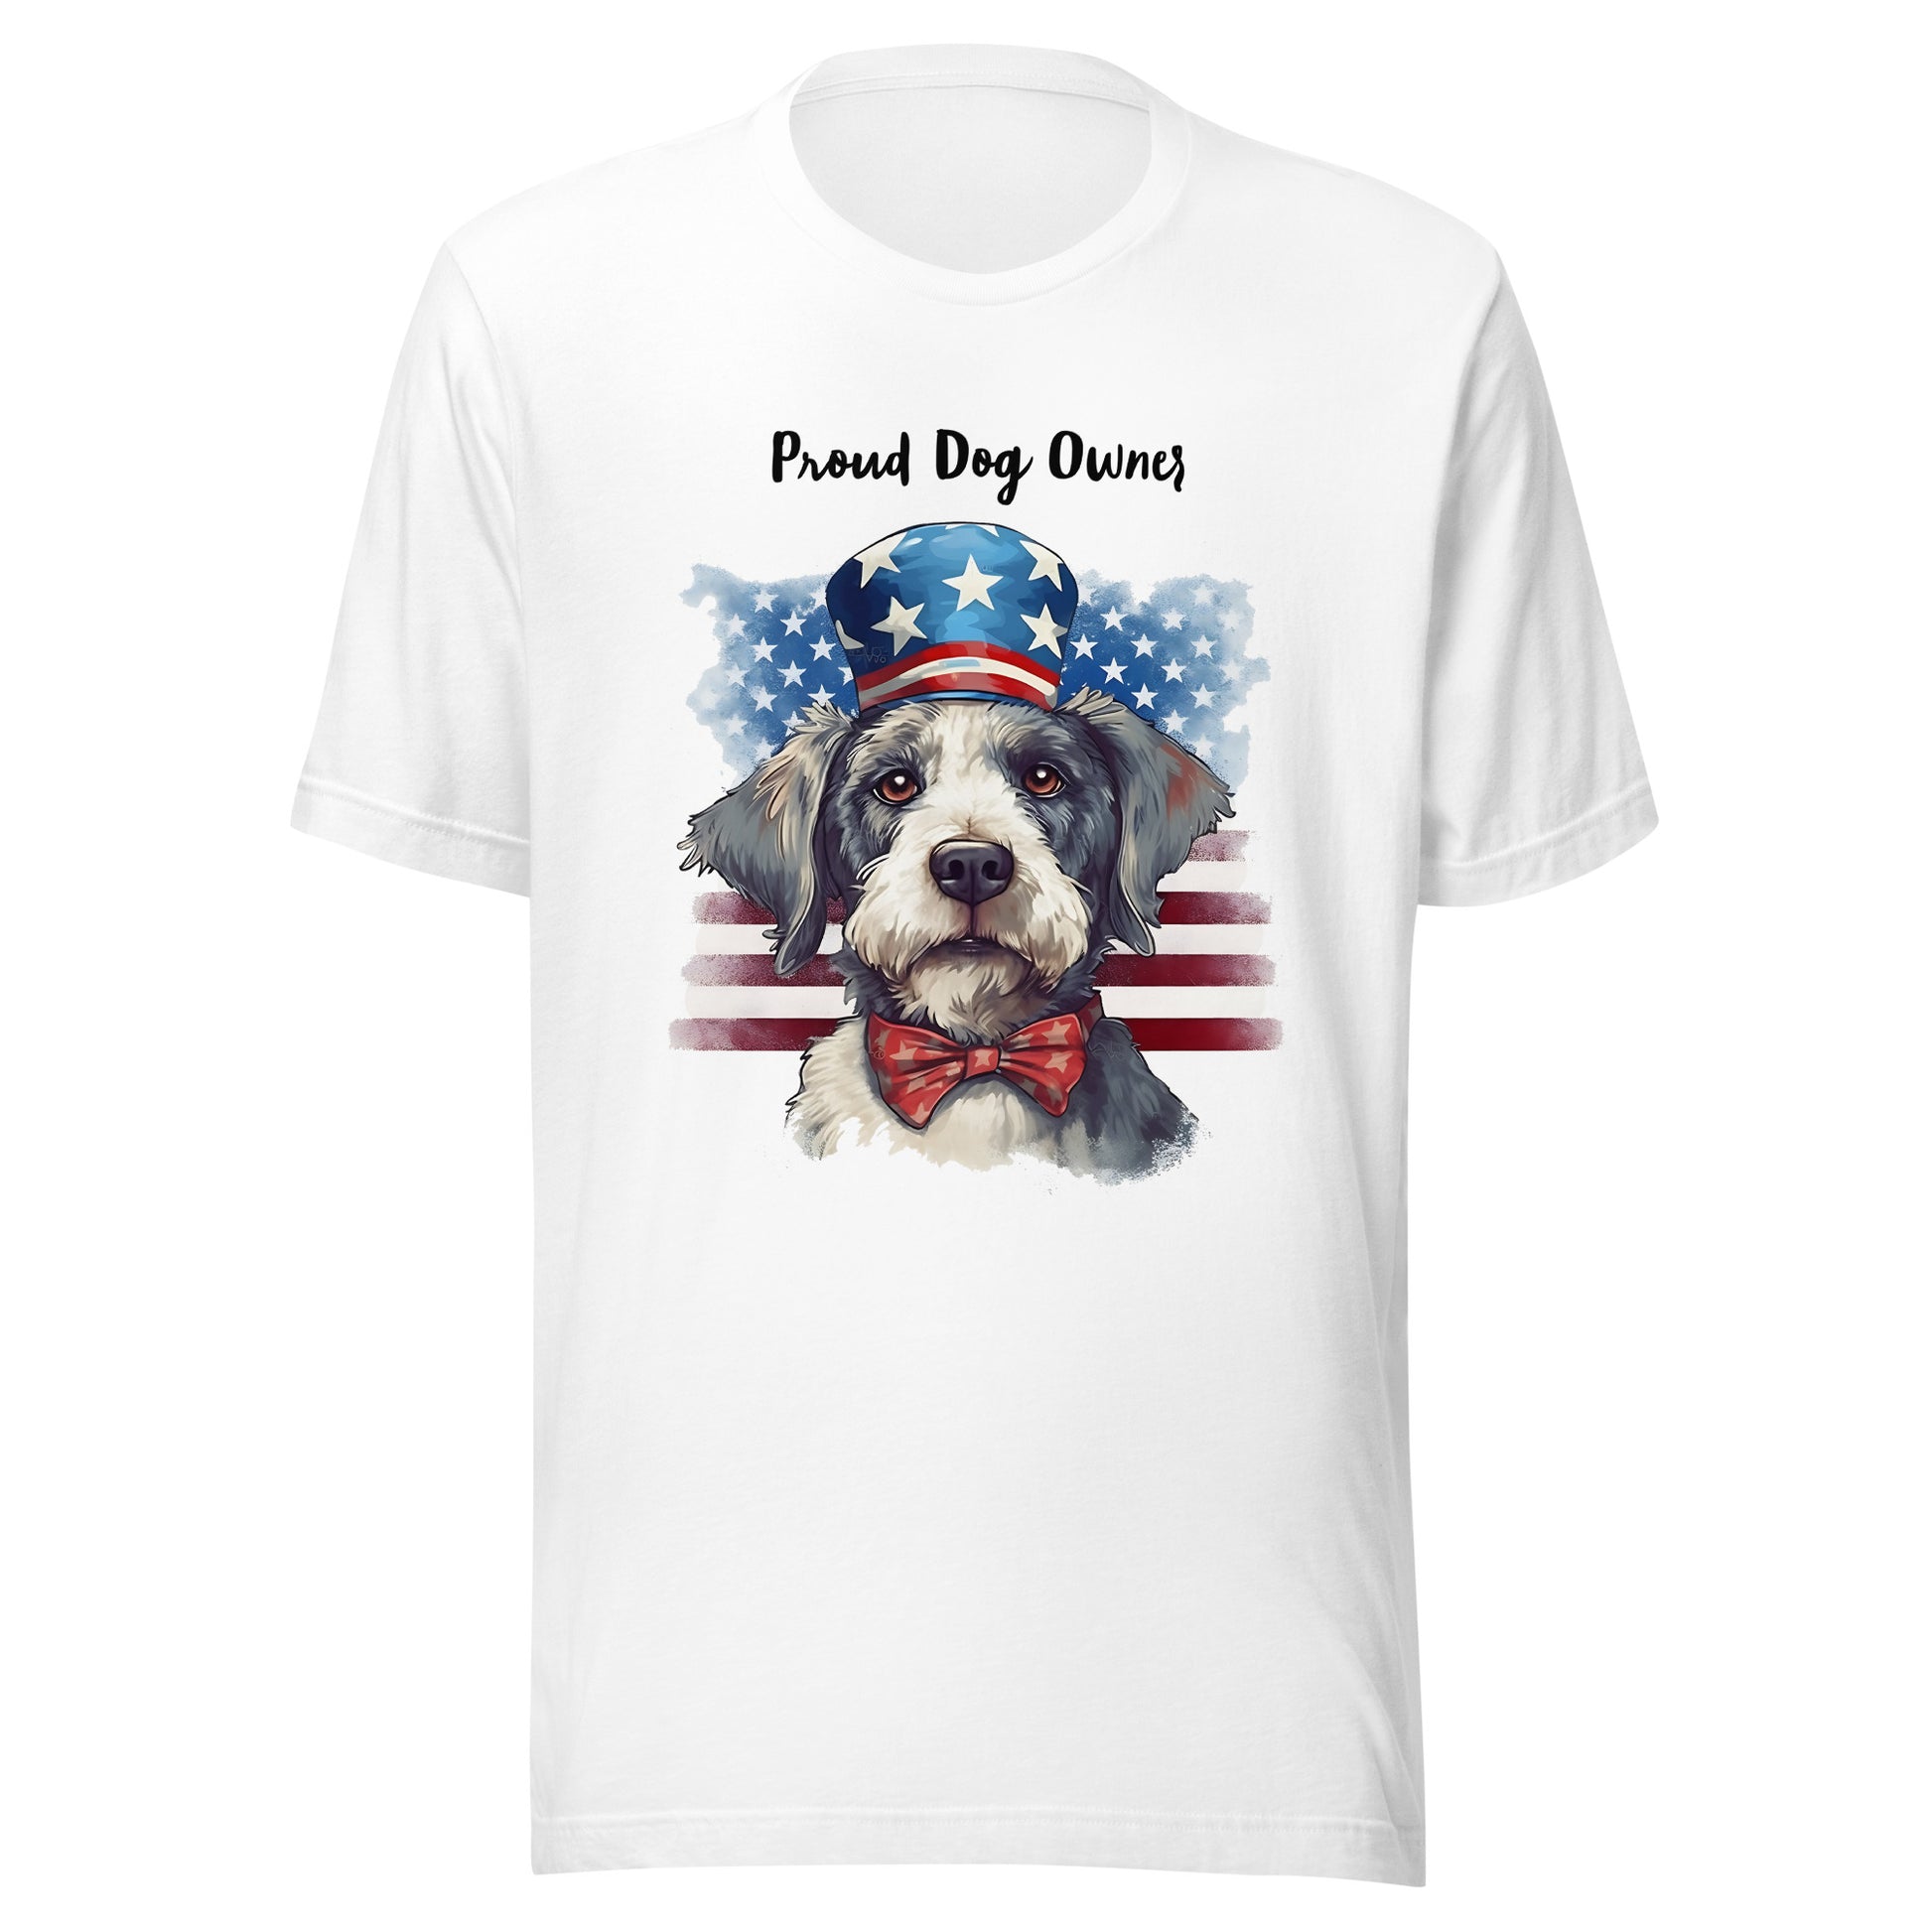 Patriotic Dog Tibetan Terrier  White T-Shirt For Proud Dog Owner